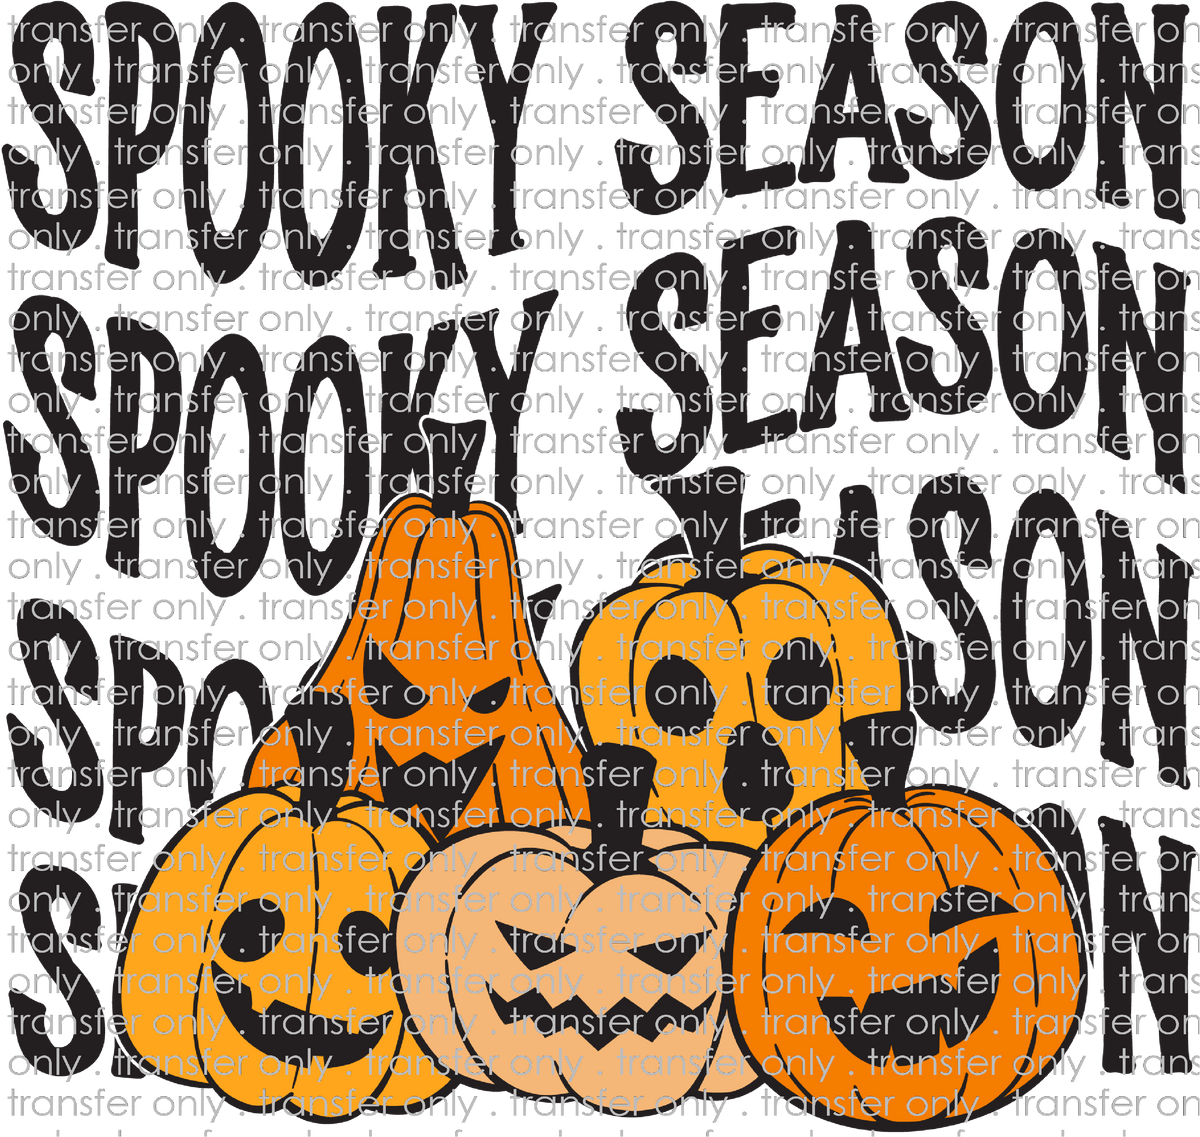 halloween tumblr background